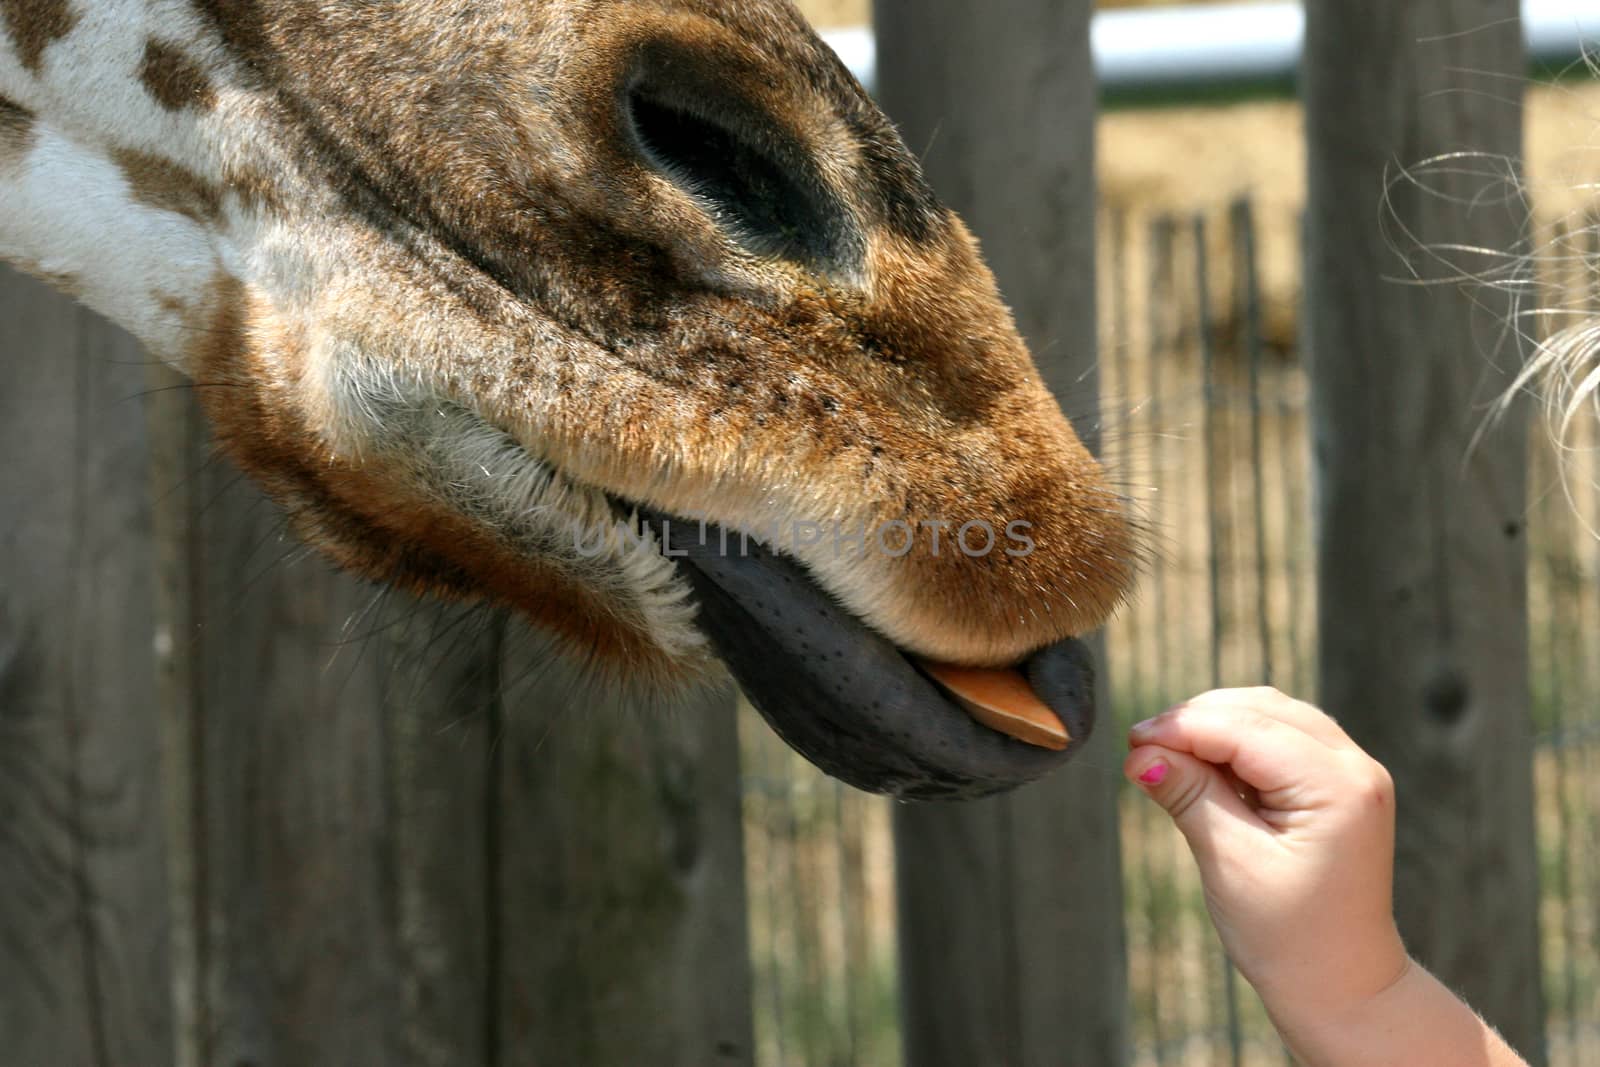 Tongue of giraffe by Carratera